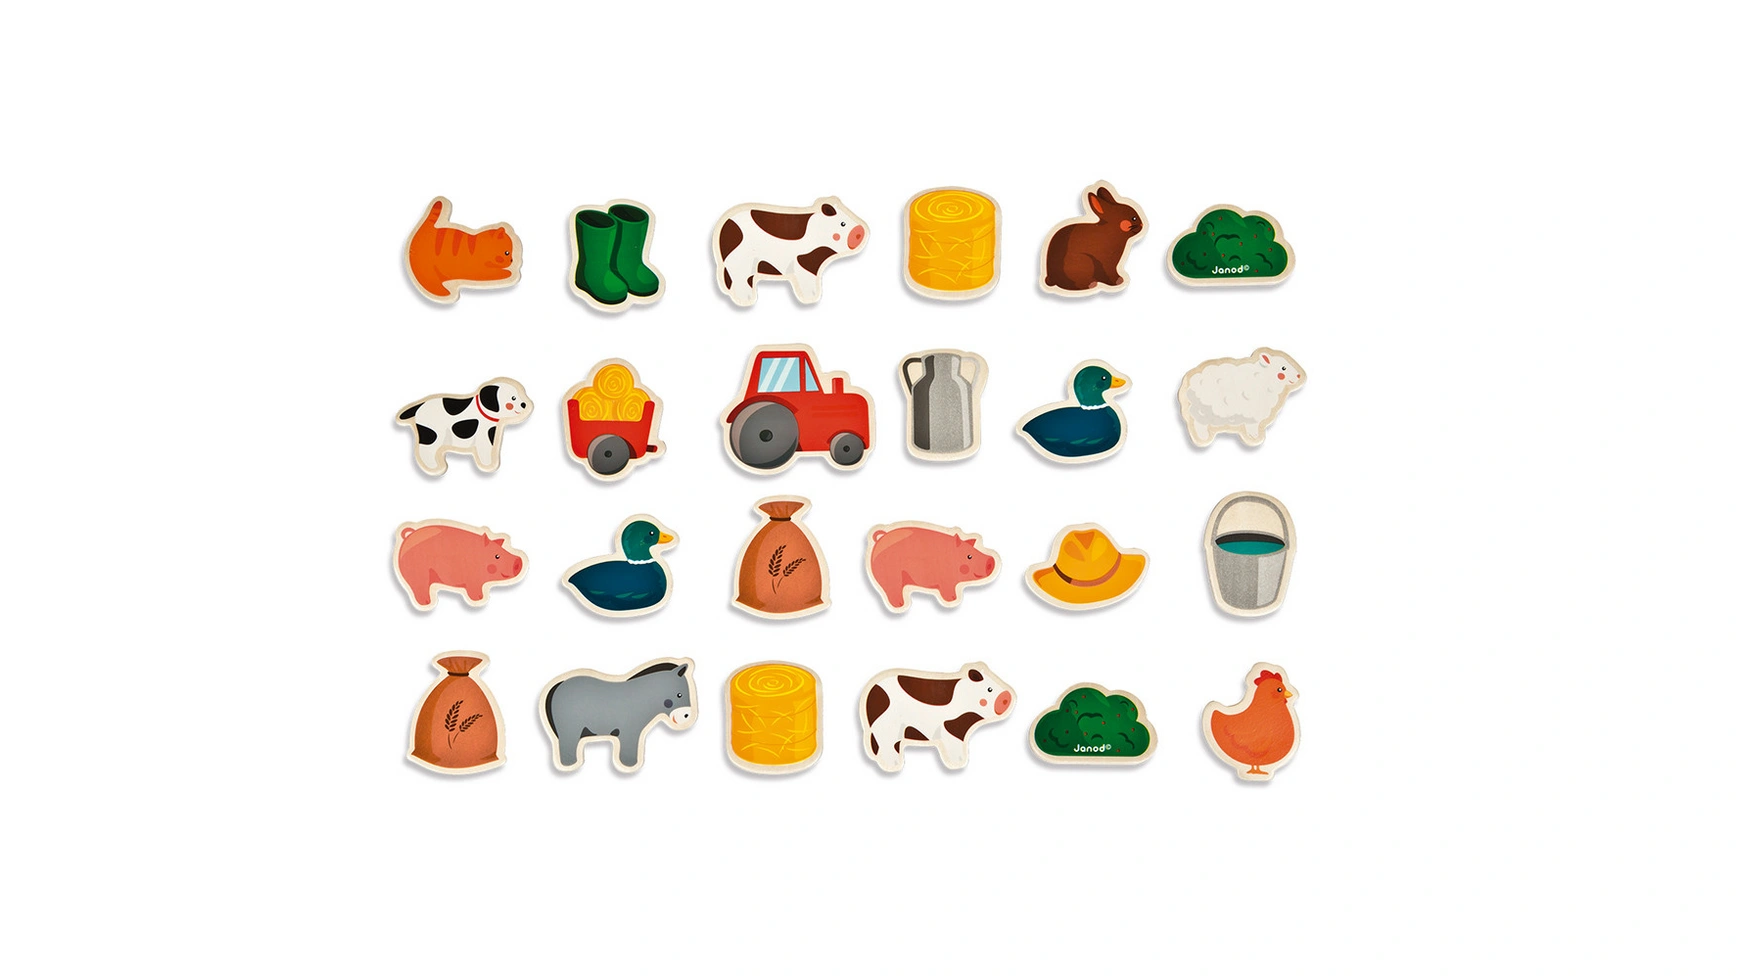 каталки игрушки janod поезд с животными серия скандинавские мотивы Набор магнитов ферма 24 предмета (дерево) Janod